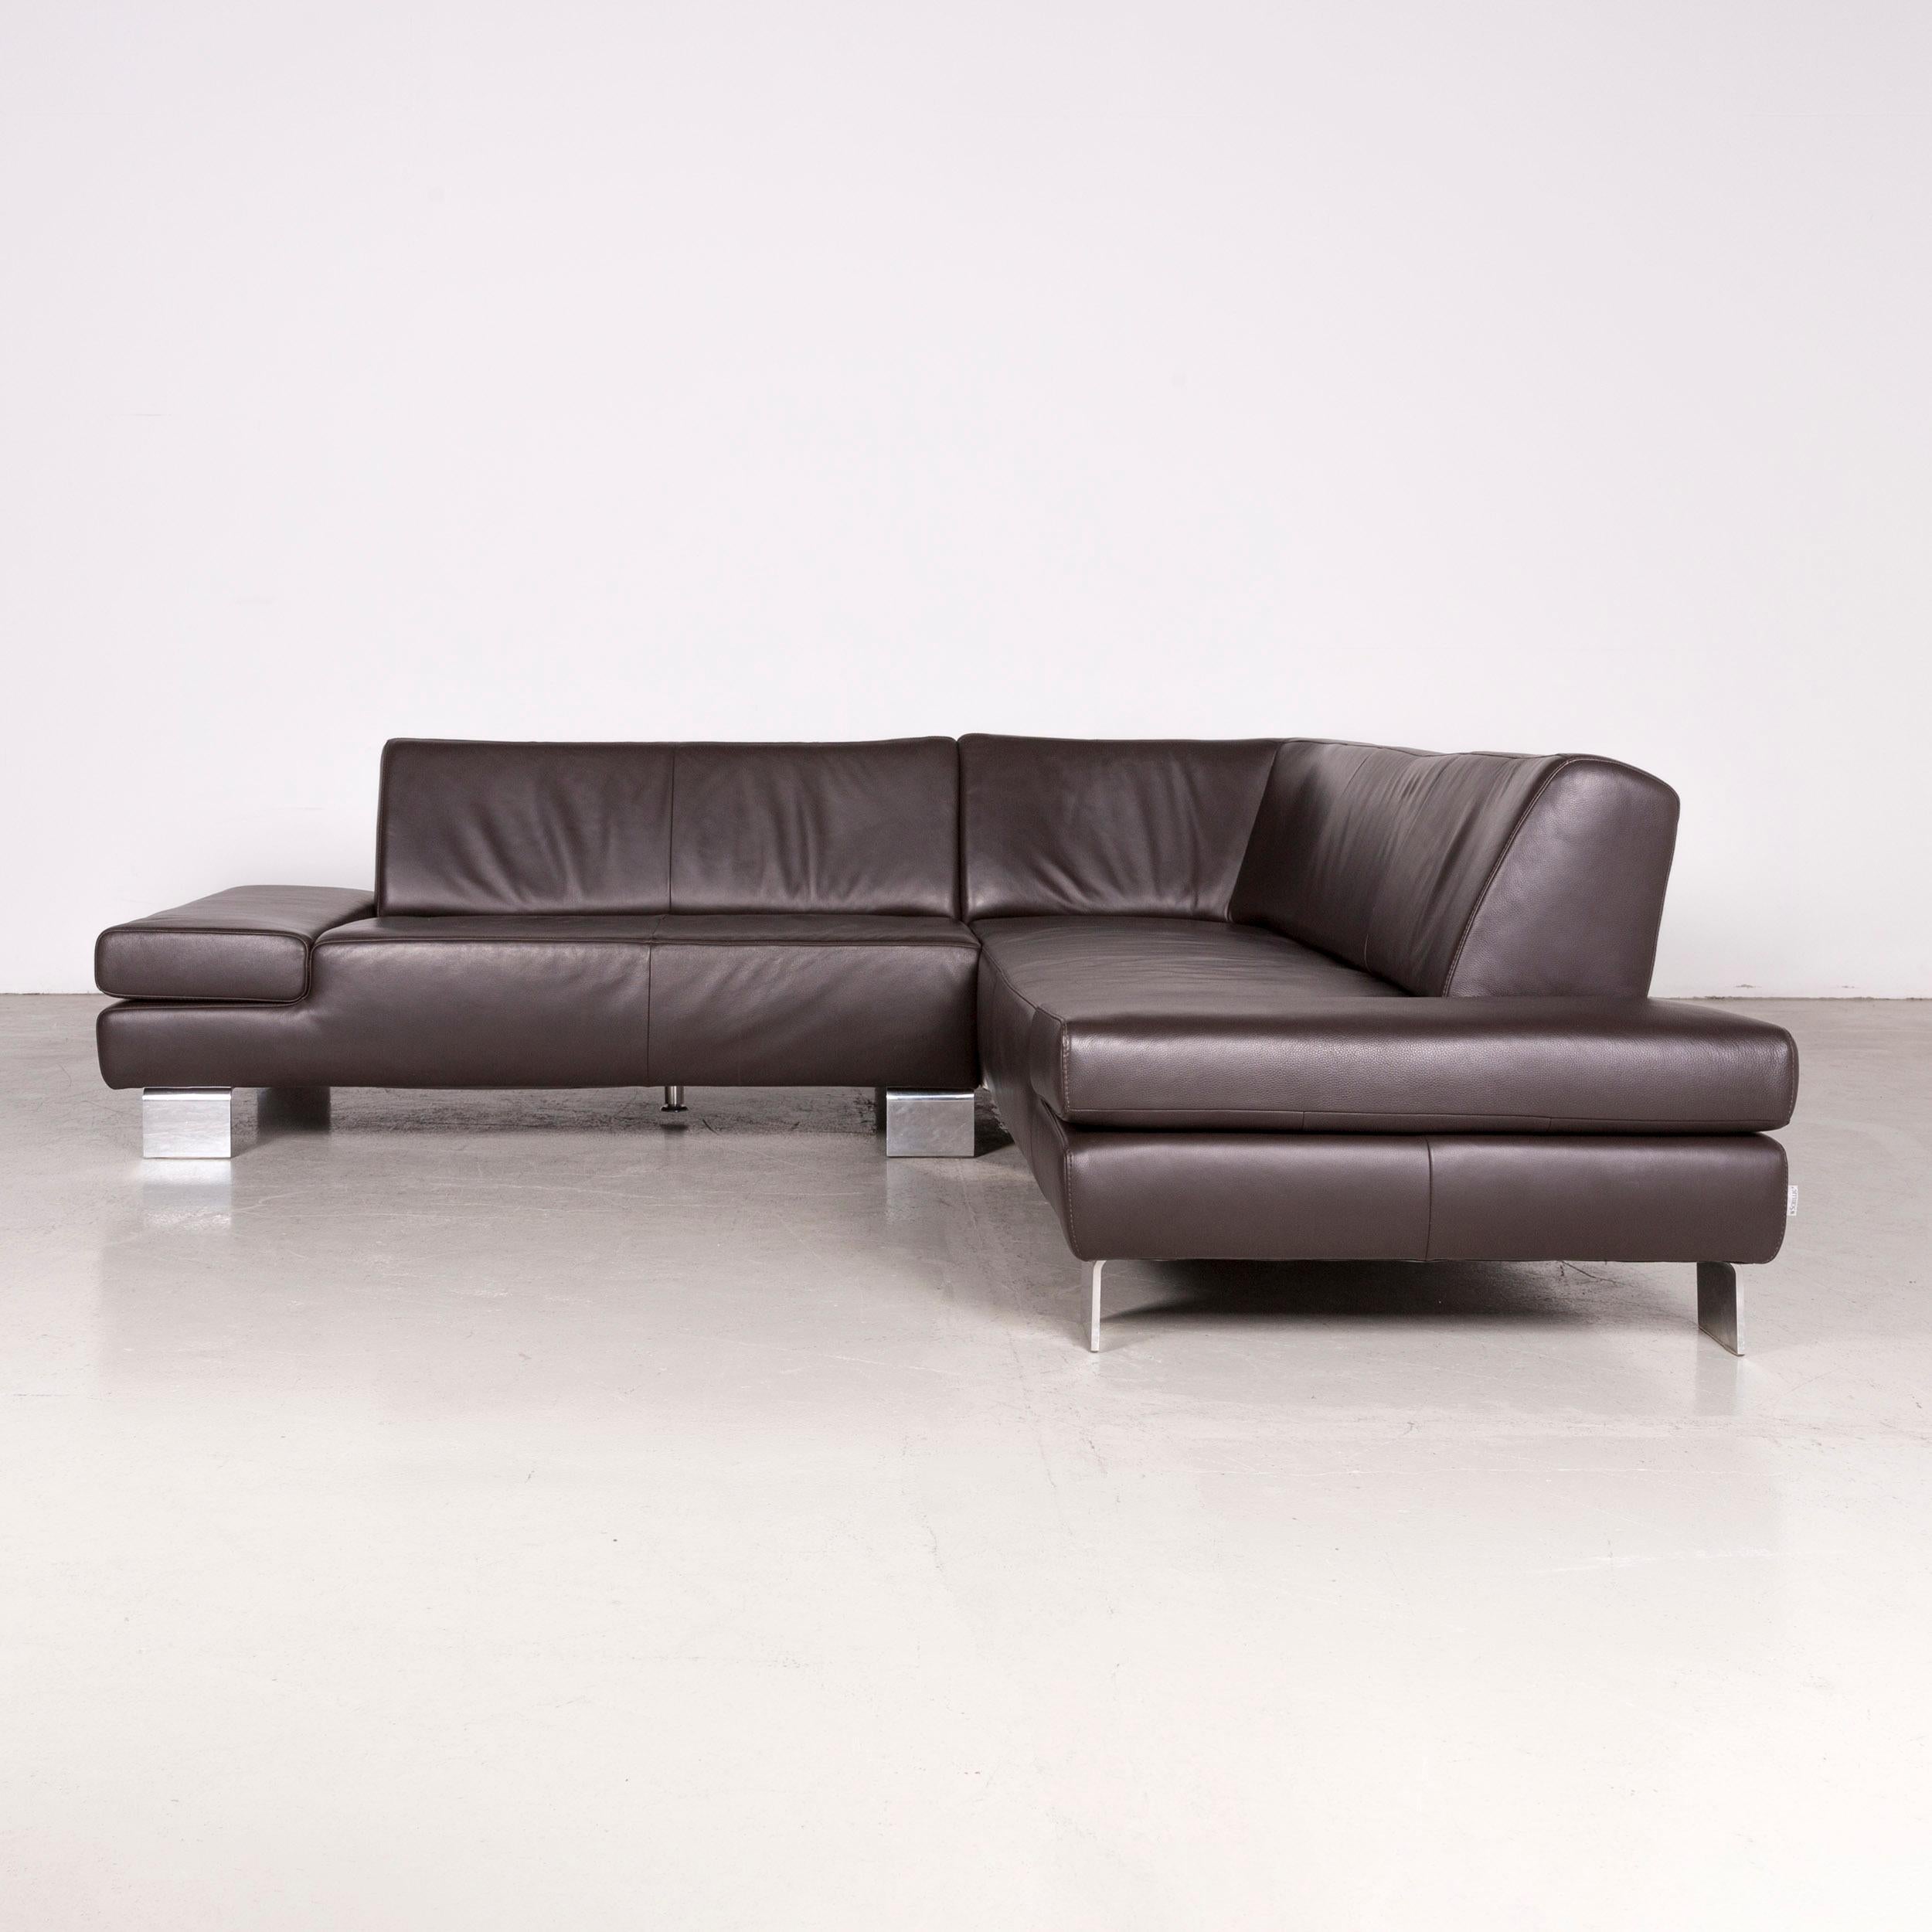 Willi Schillig Taboo Designer Leather Corner Sofa Brown Genuine Leather Couch 3